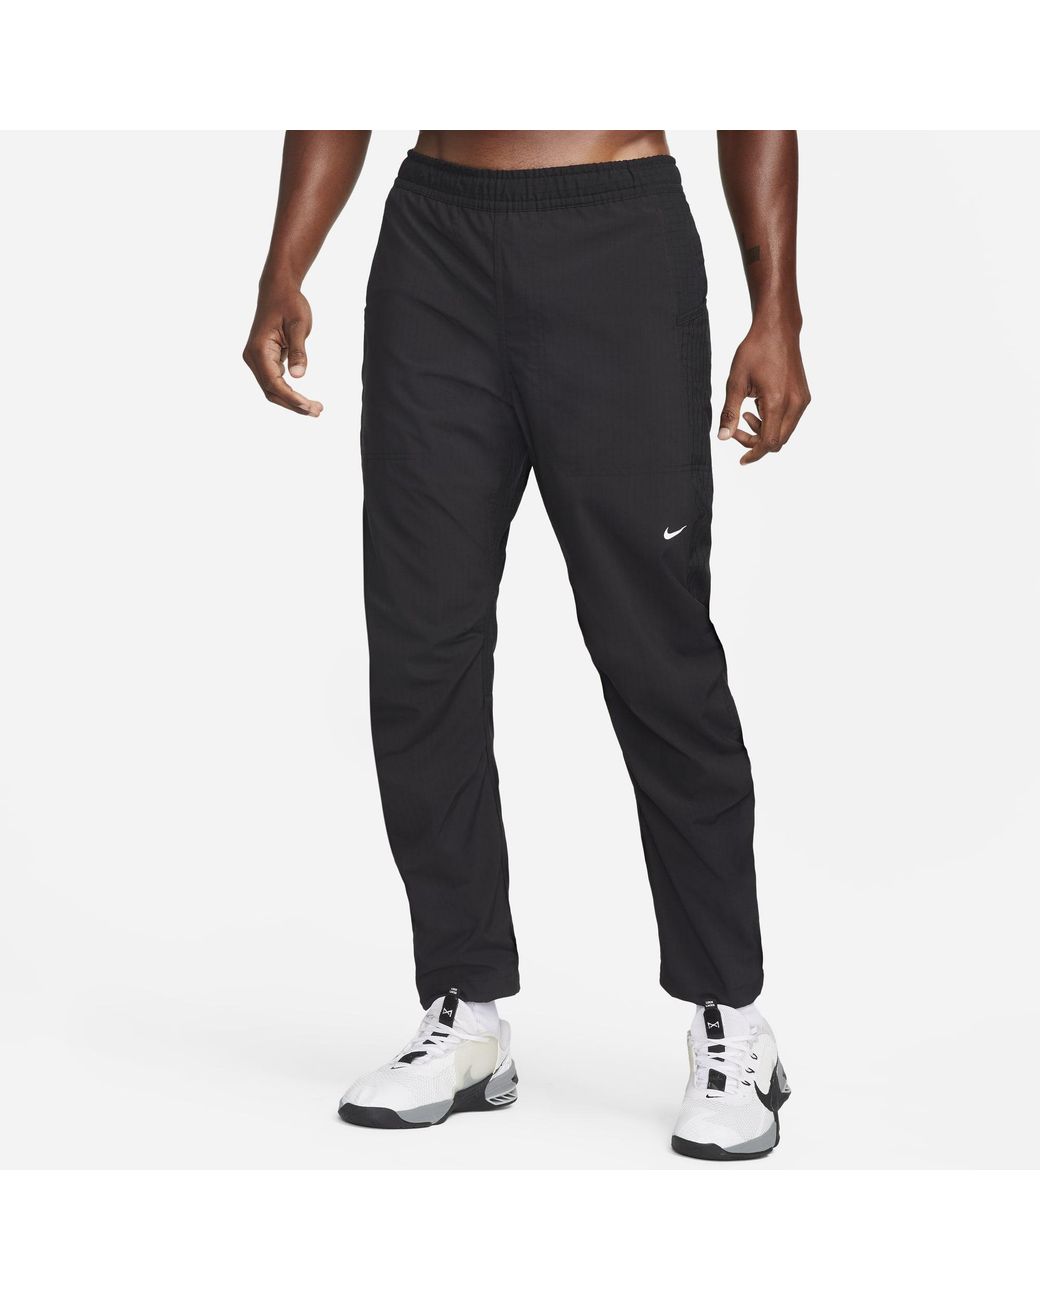 Nike Pro Dri-FIT ADV Recovery Tight - Black/Black/Iron Grey - Mens Clothing